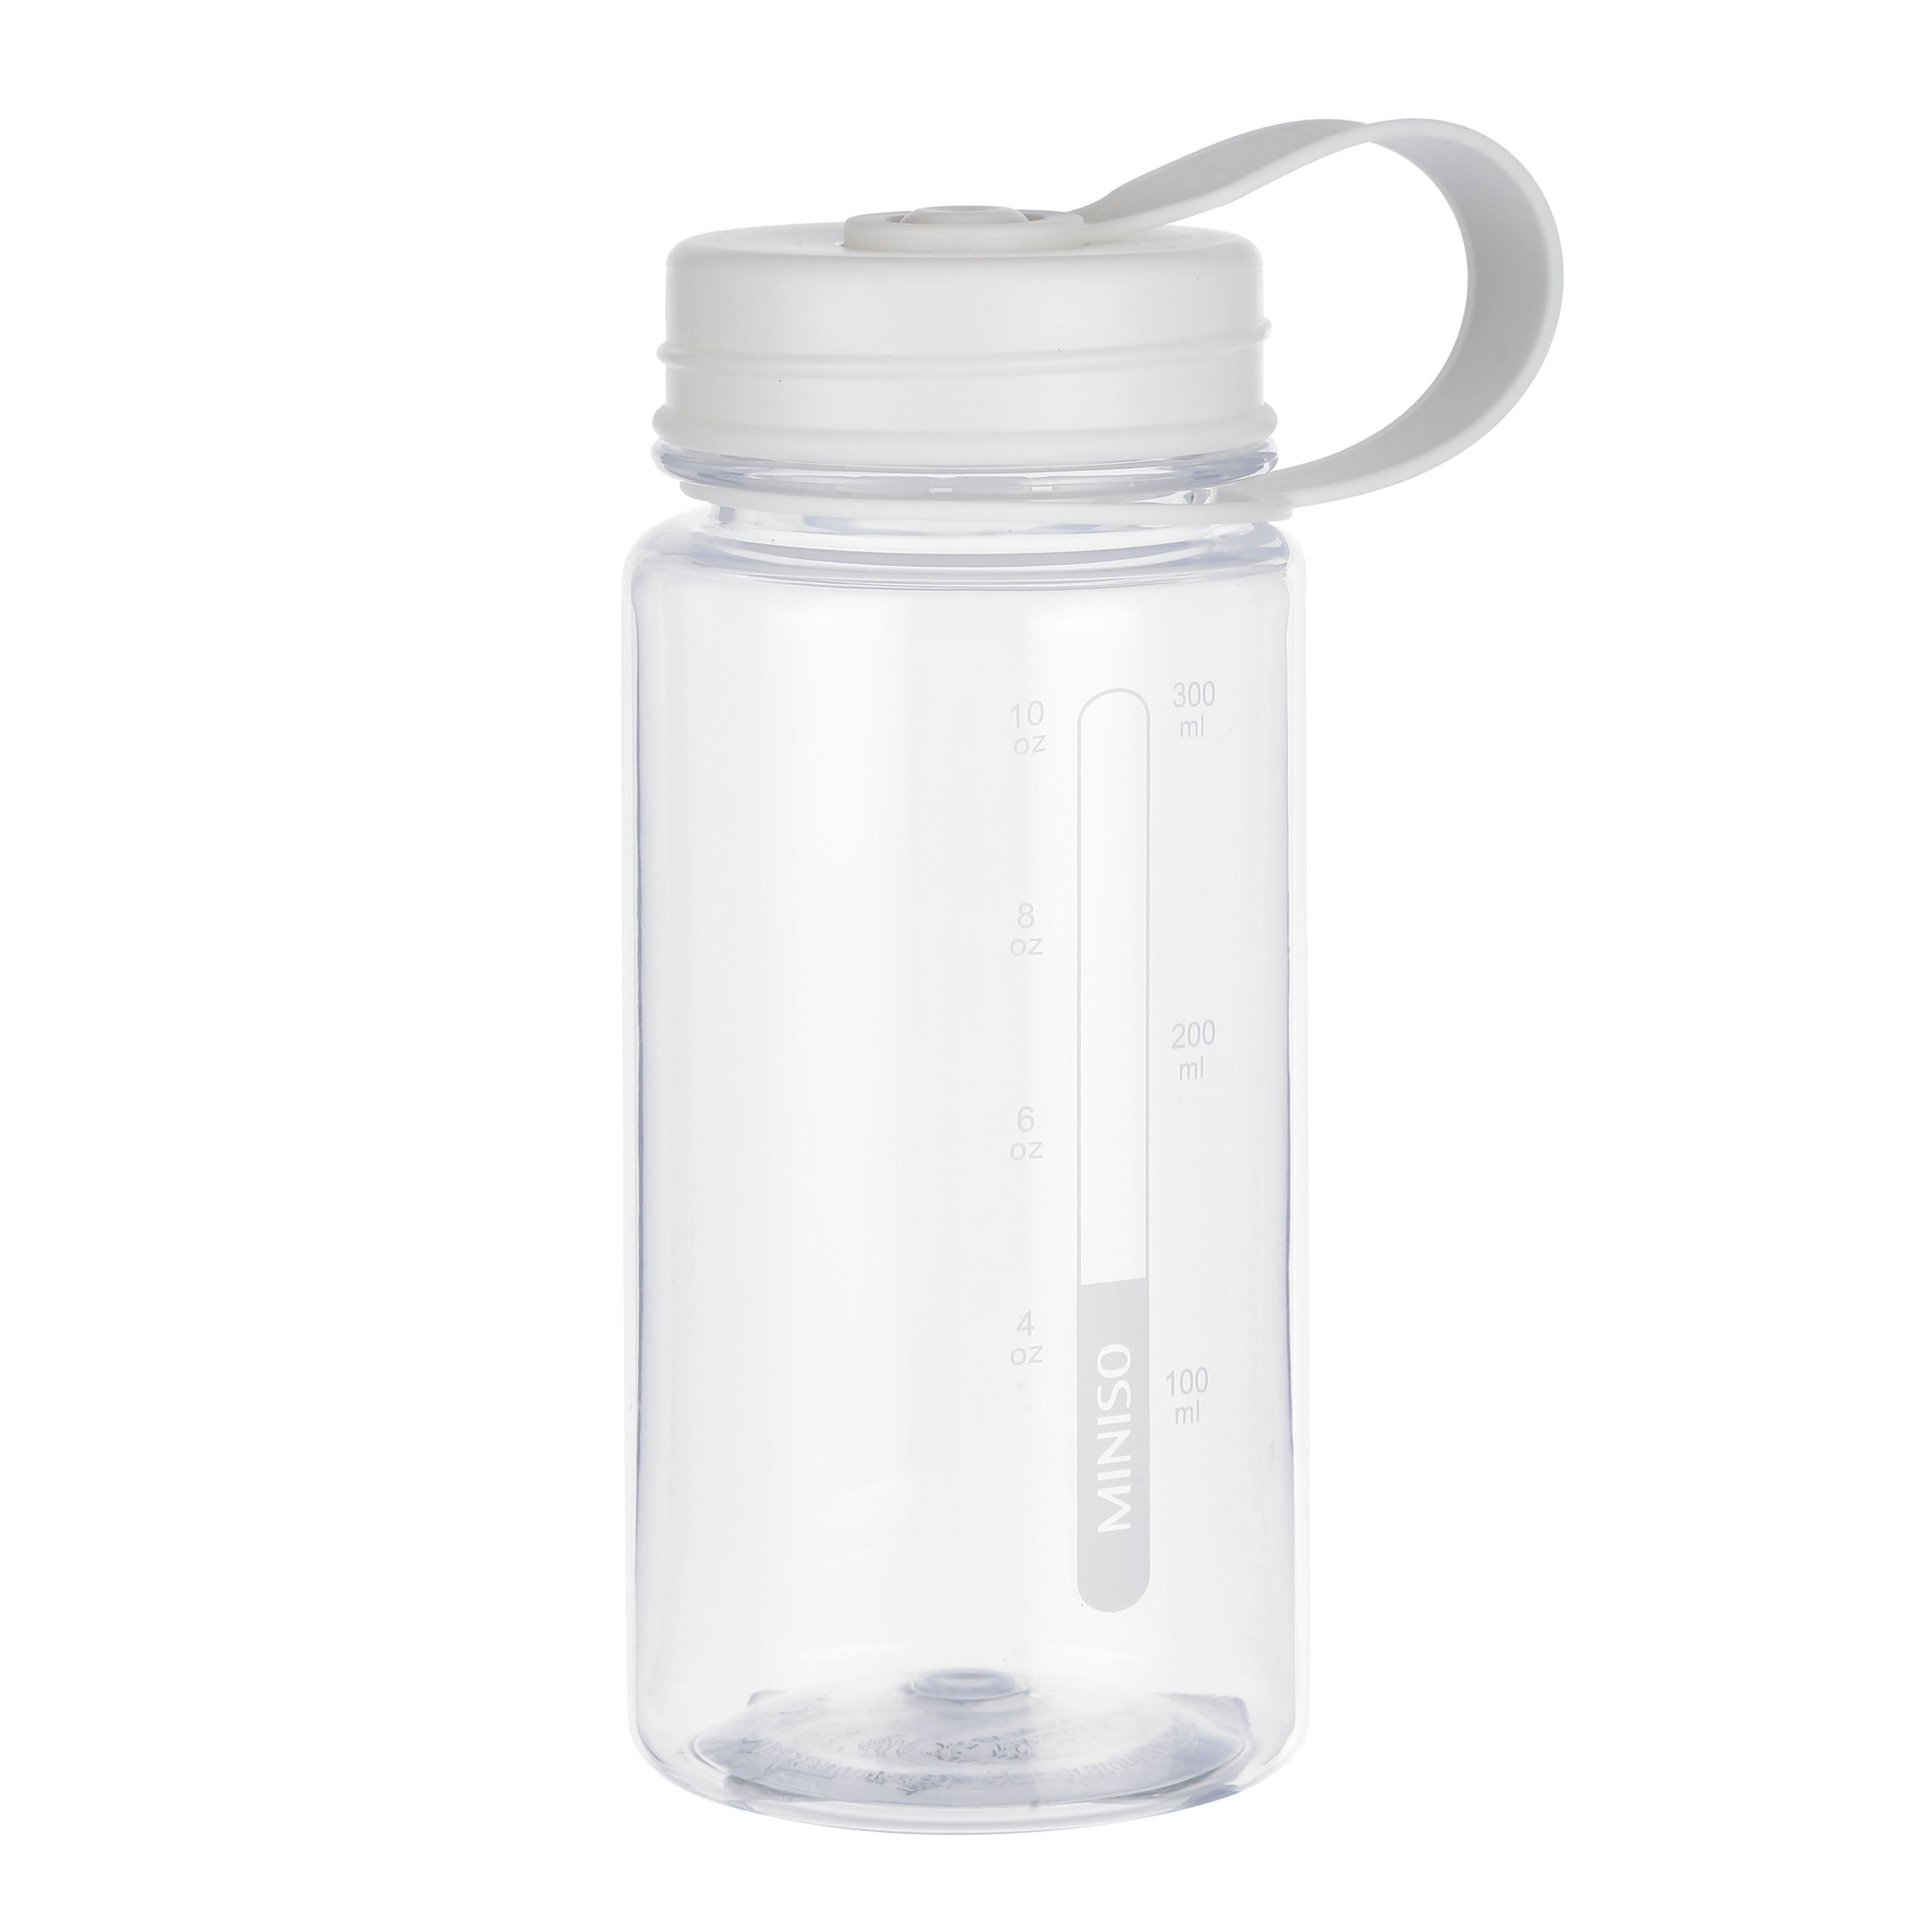 MINISO MS143 1 Liter Water Bottle for Kids Motivational Water